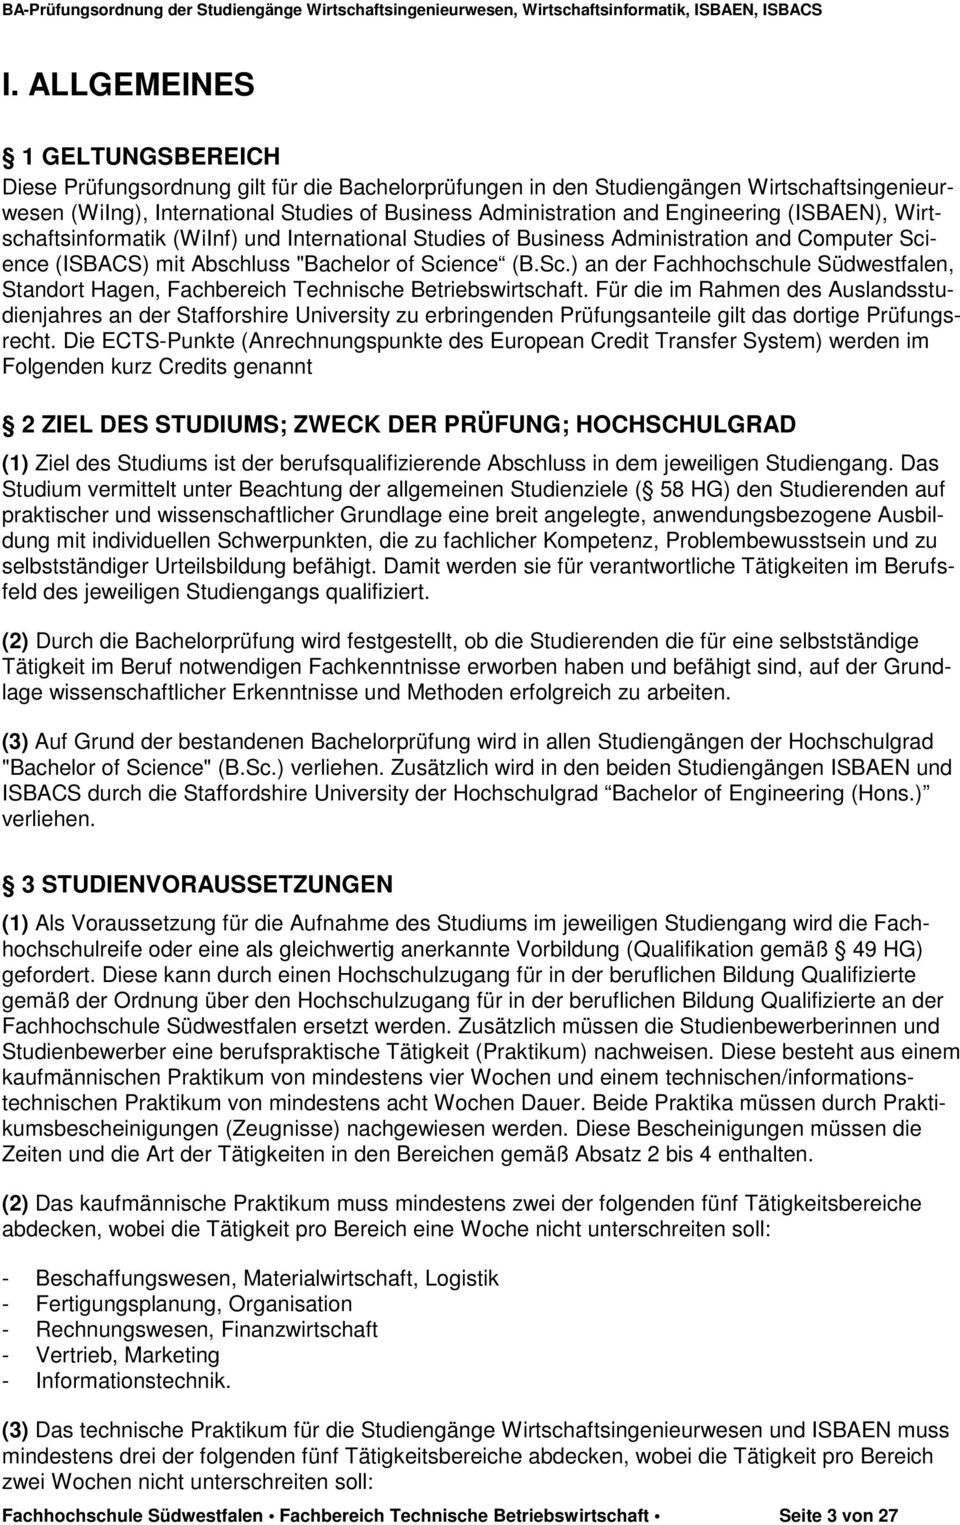 ence (ISBACS) mit Abschluss "Bachelor of Science (B.Sc.) an der Fachhochschule Südwestfalen, Standort Hagen, Fachbereich Technische Betriebswirtschaft.